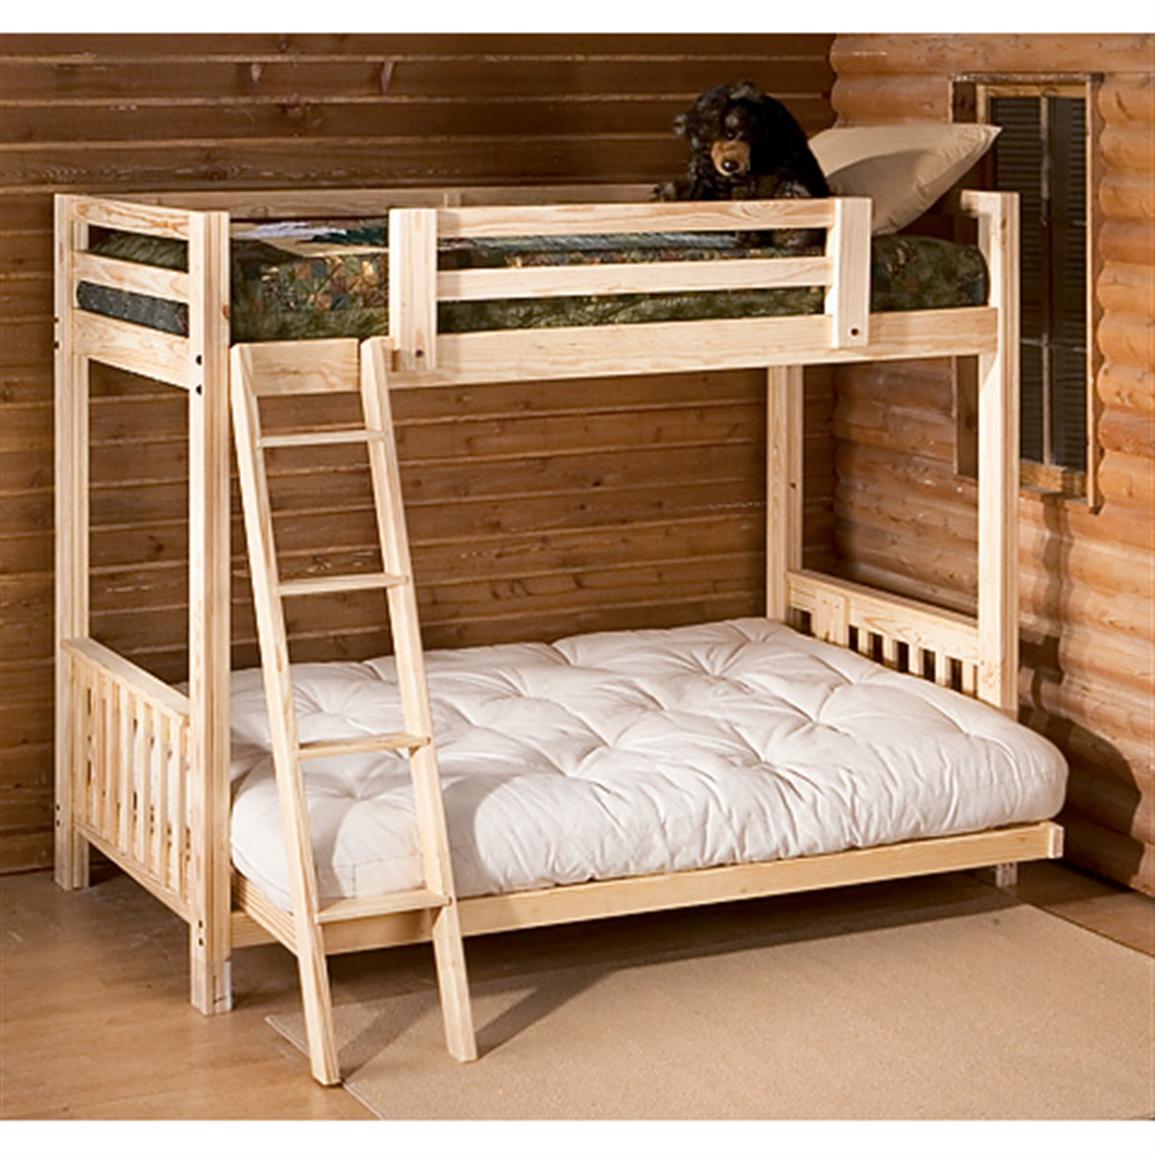 Futon Bunk Bed - 93700, Bedroom Furniture at Sportsman's Guide